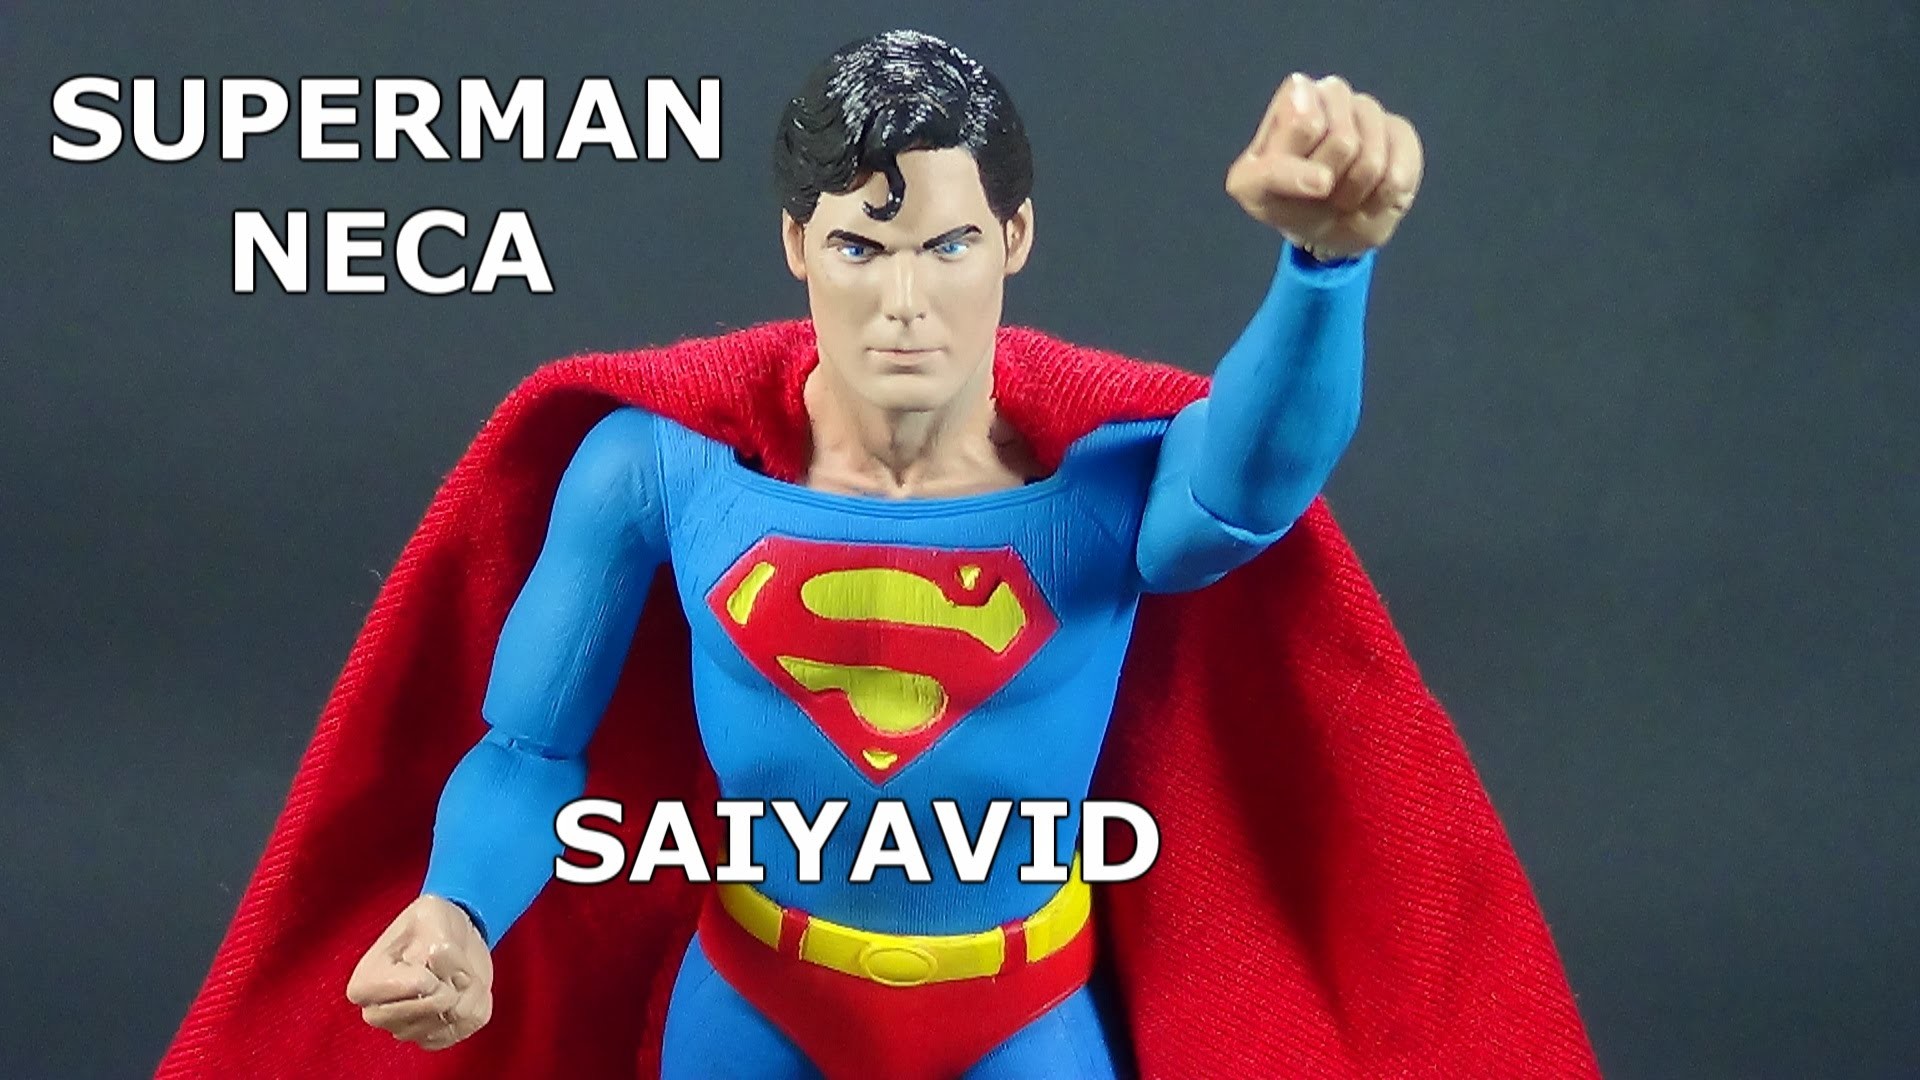 1920x1080 Superman Christopher Reeve NECA Review en EspaÃ±ol